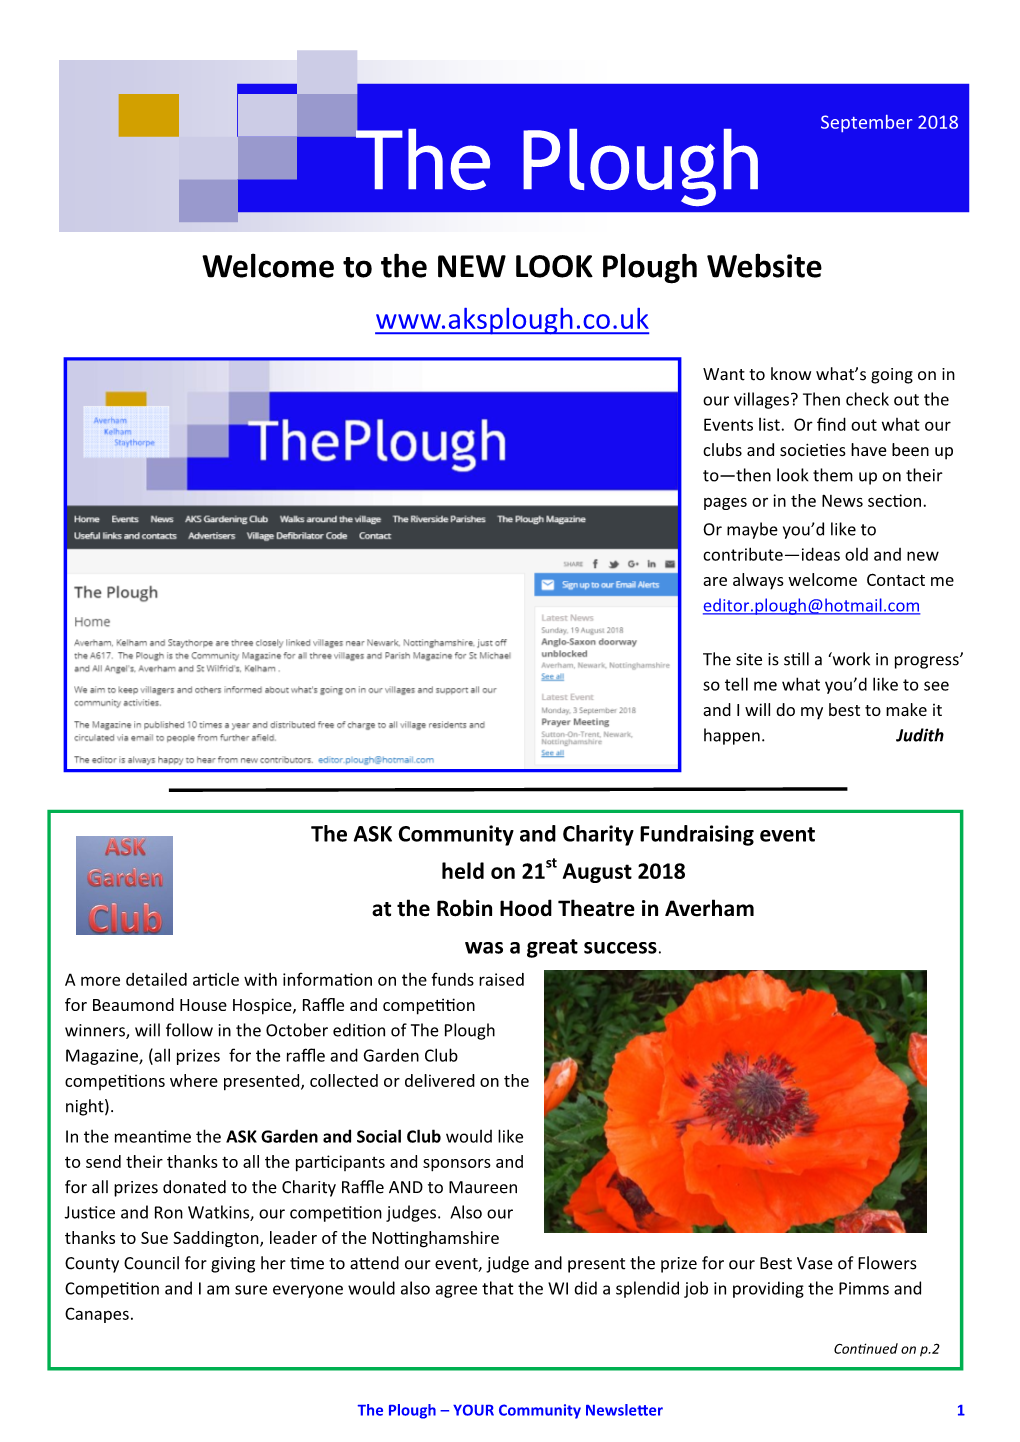 The NEW LOOK Plough Website